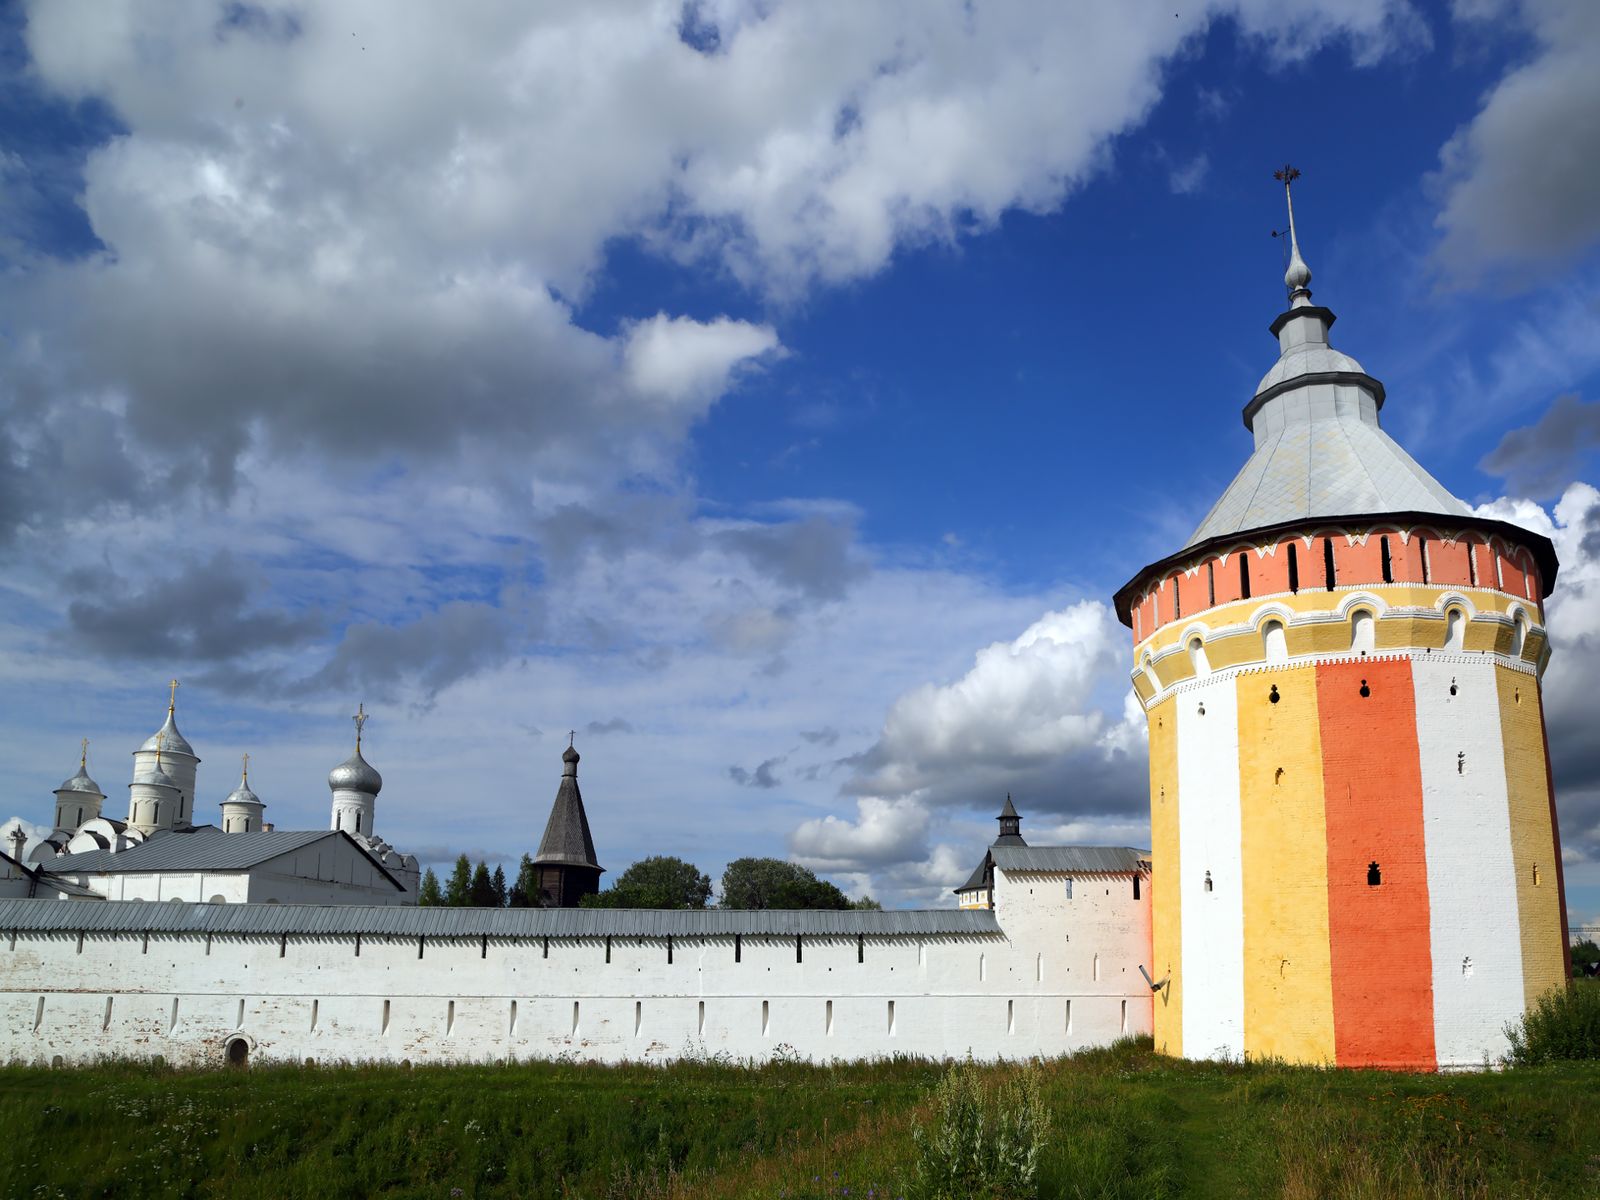 Башня монастыря